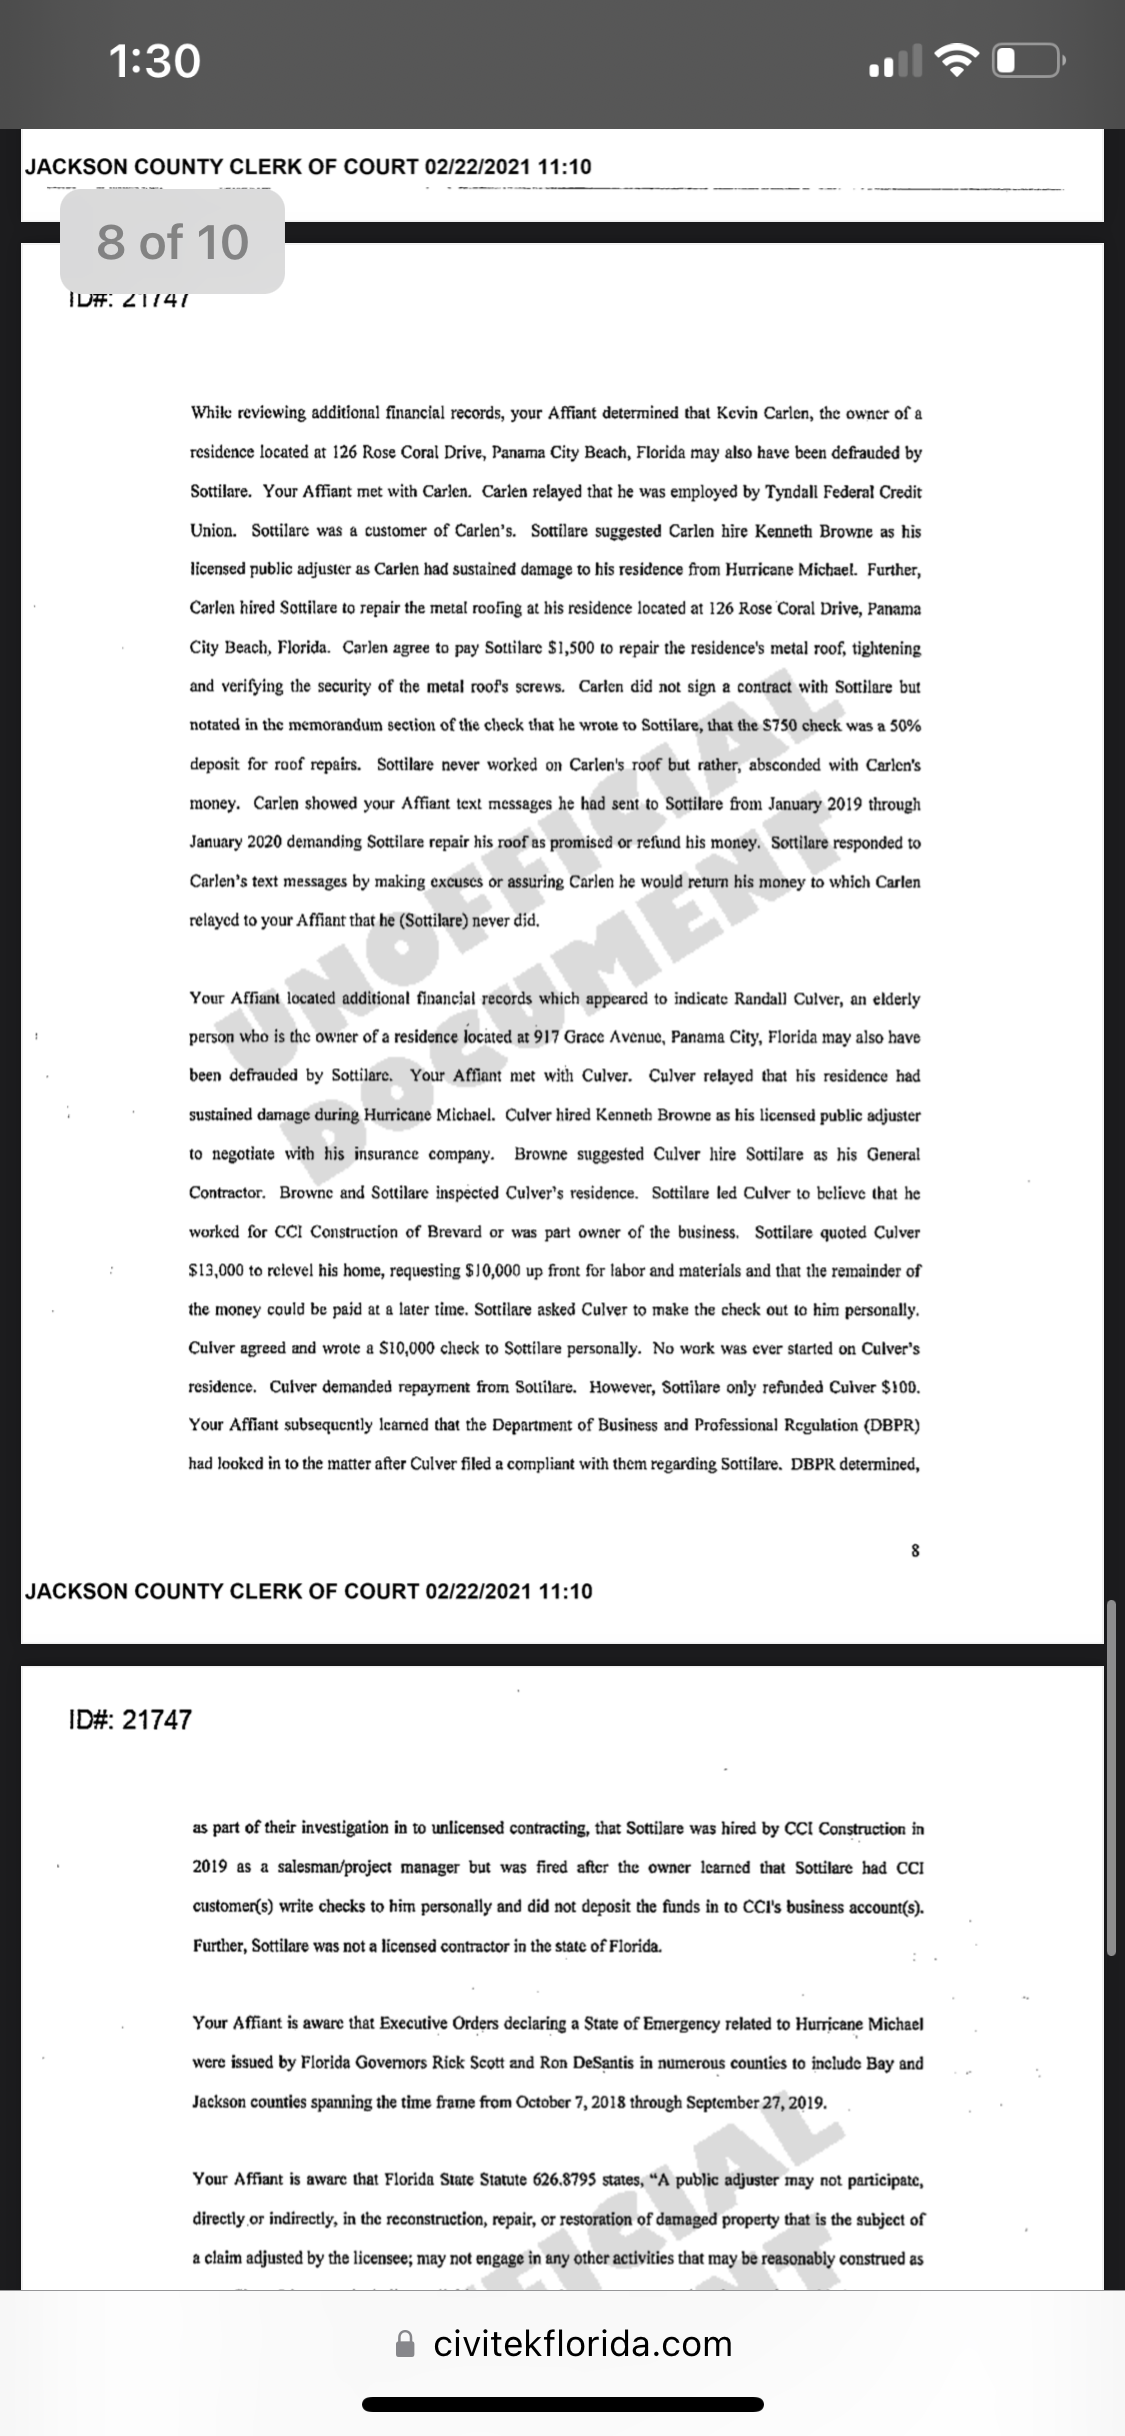 Page 8 felony, Kenneth Browne